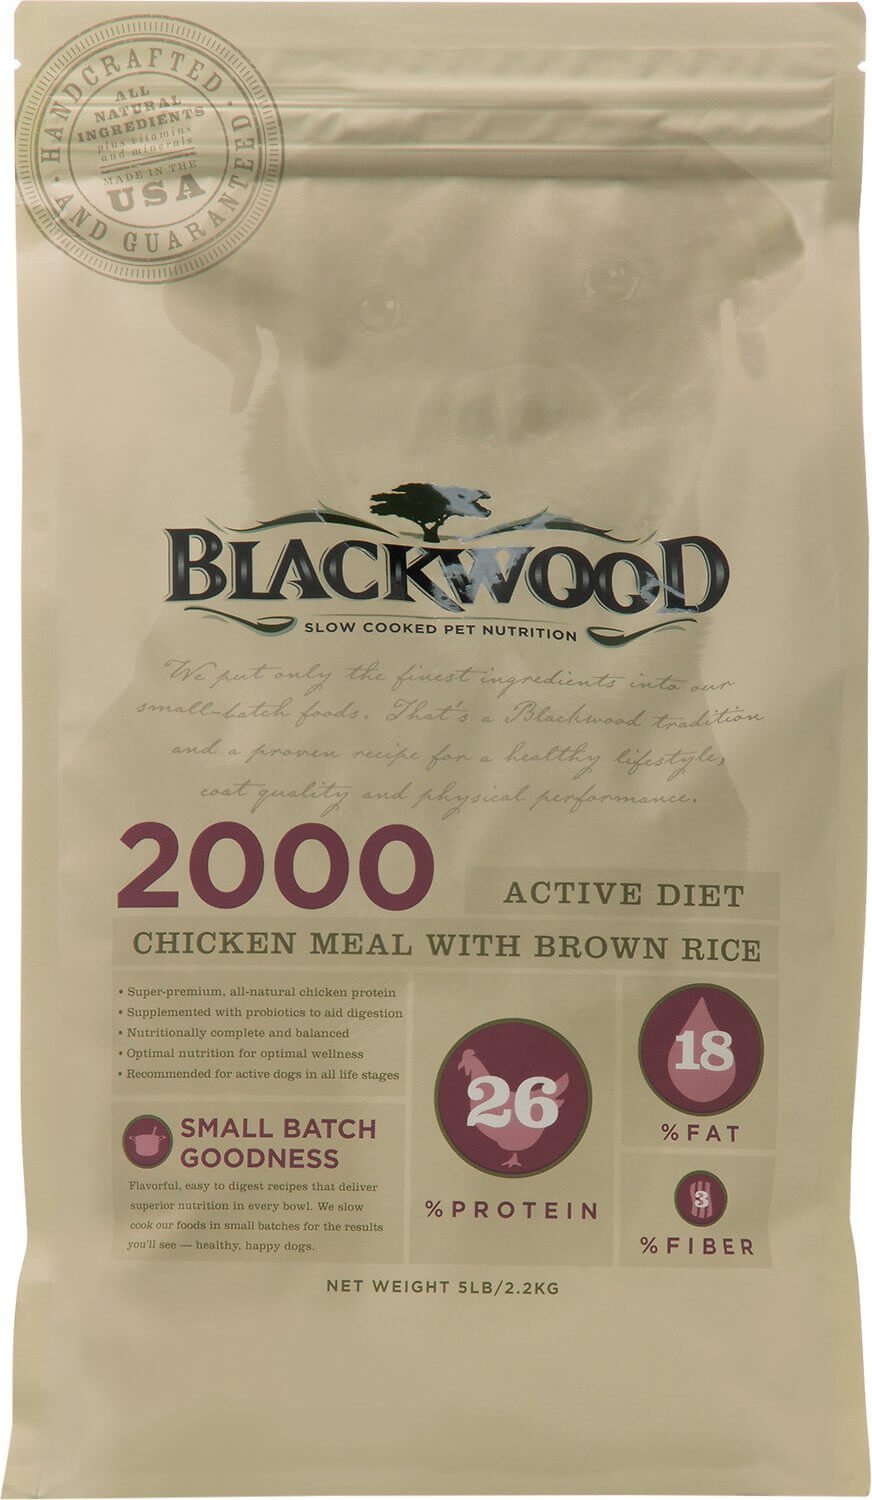 Blackwood Original Recipe Dog Food Review (Dry)